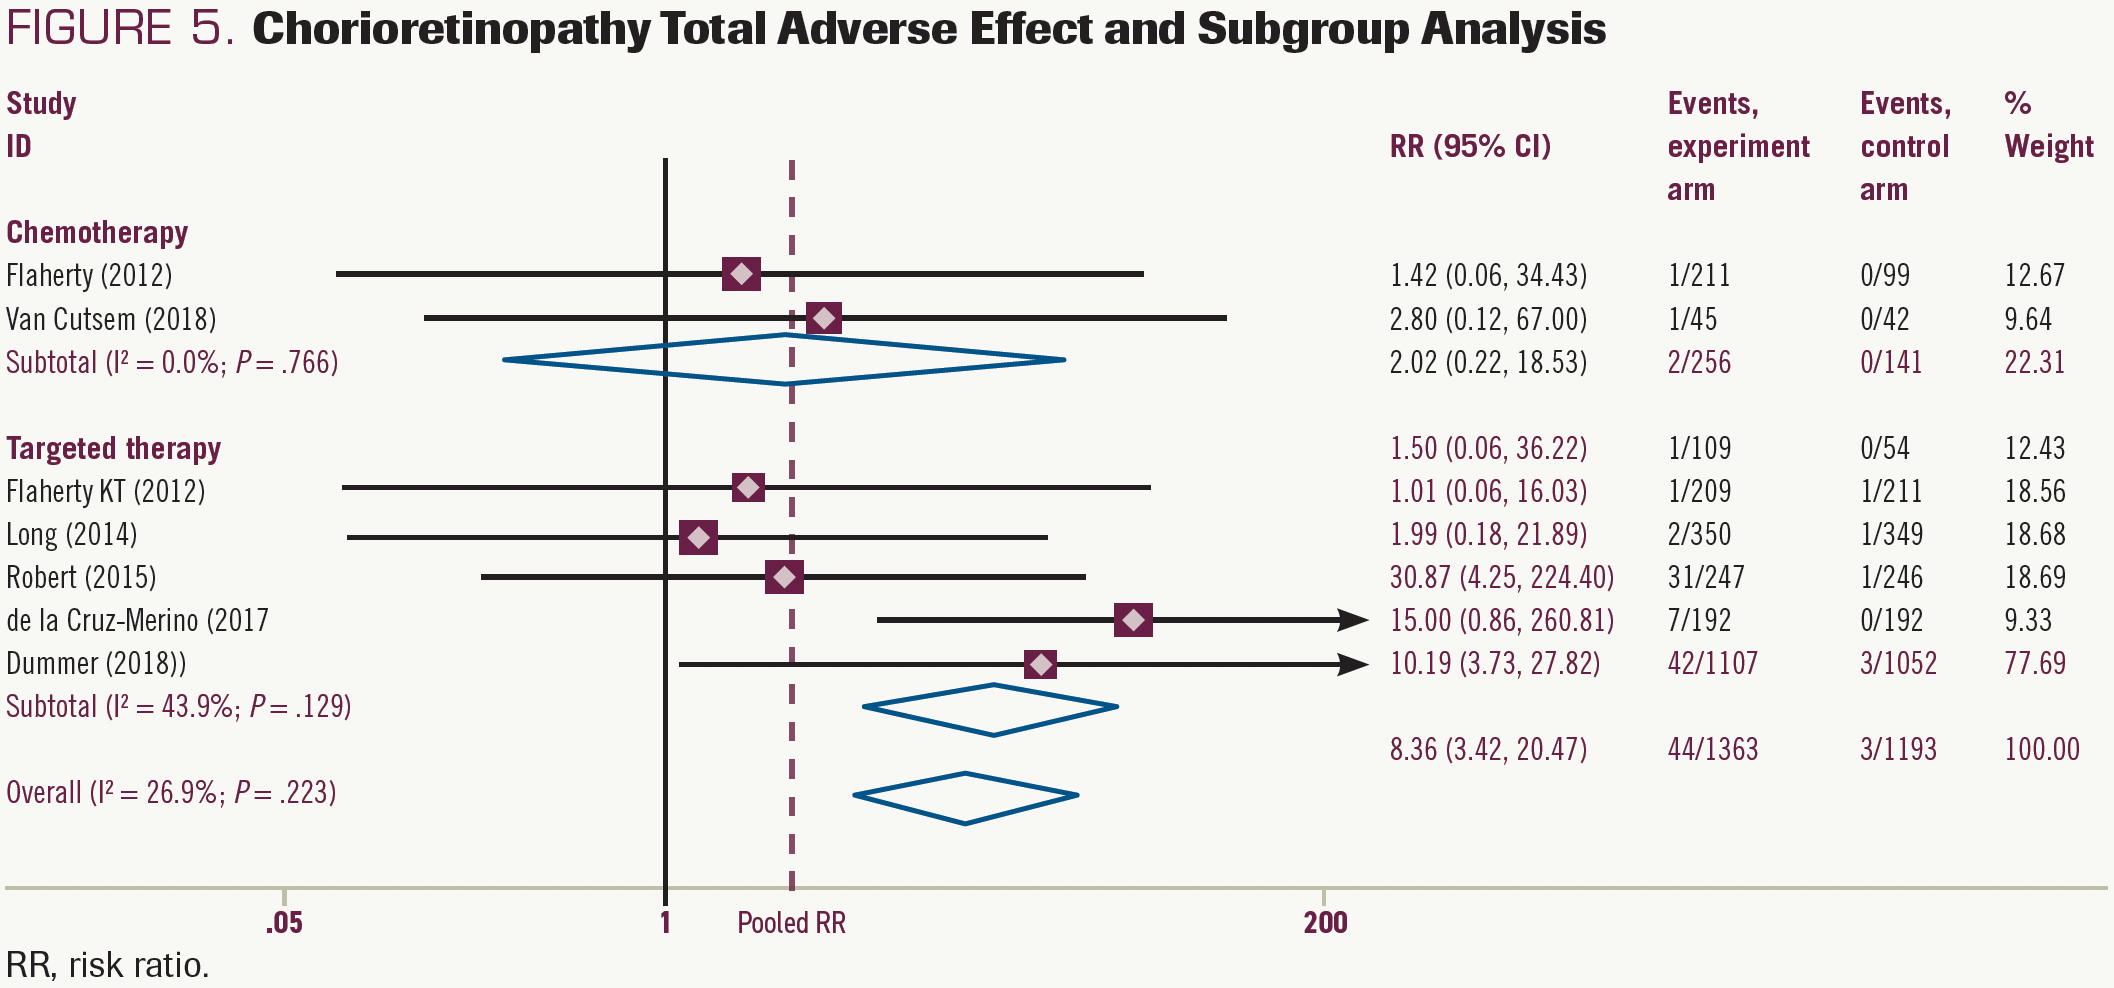 FIGURE 5. Chorioretinopathy Total Adverse Effect and Subgroup Analysis